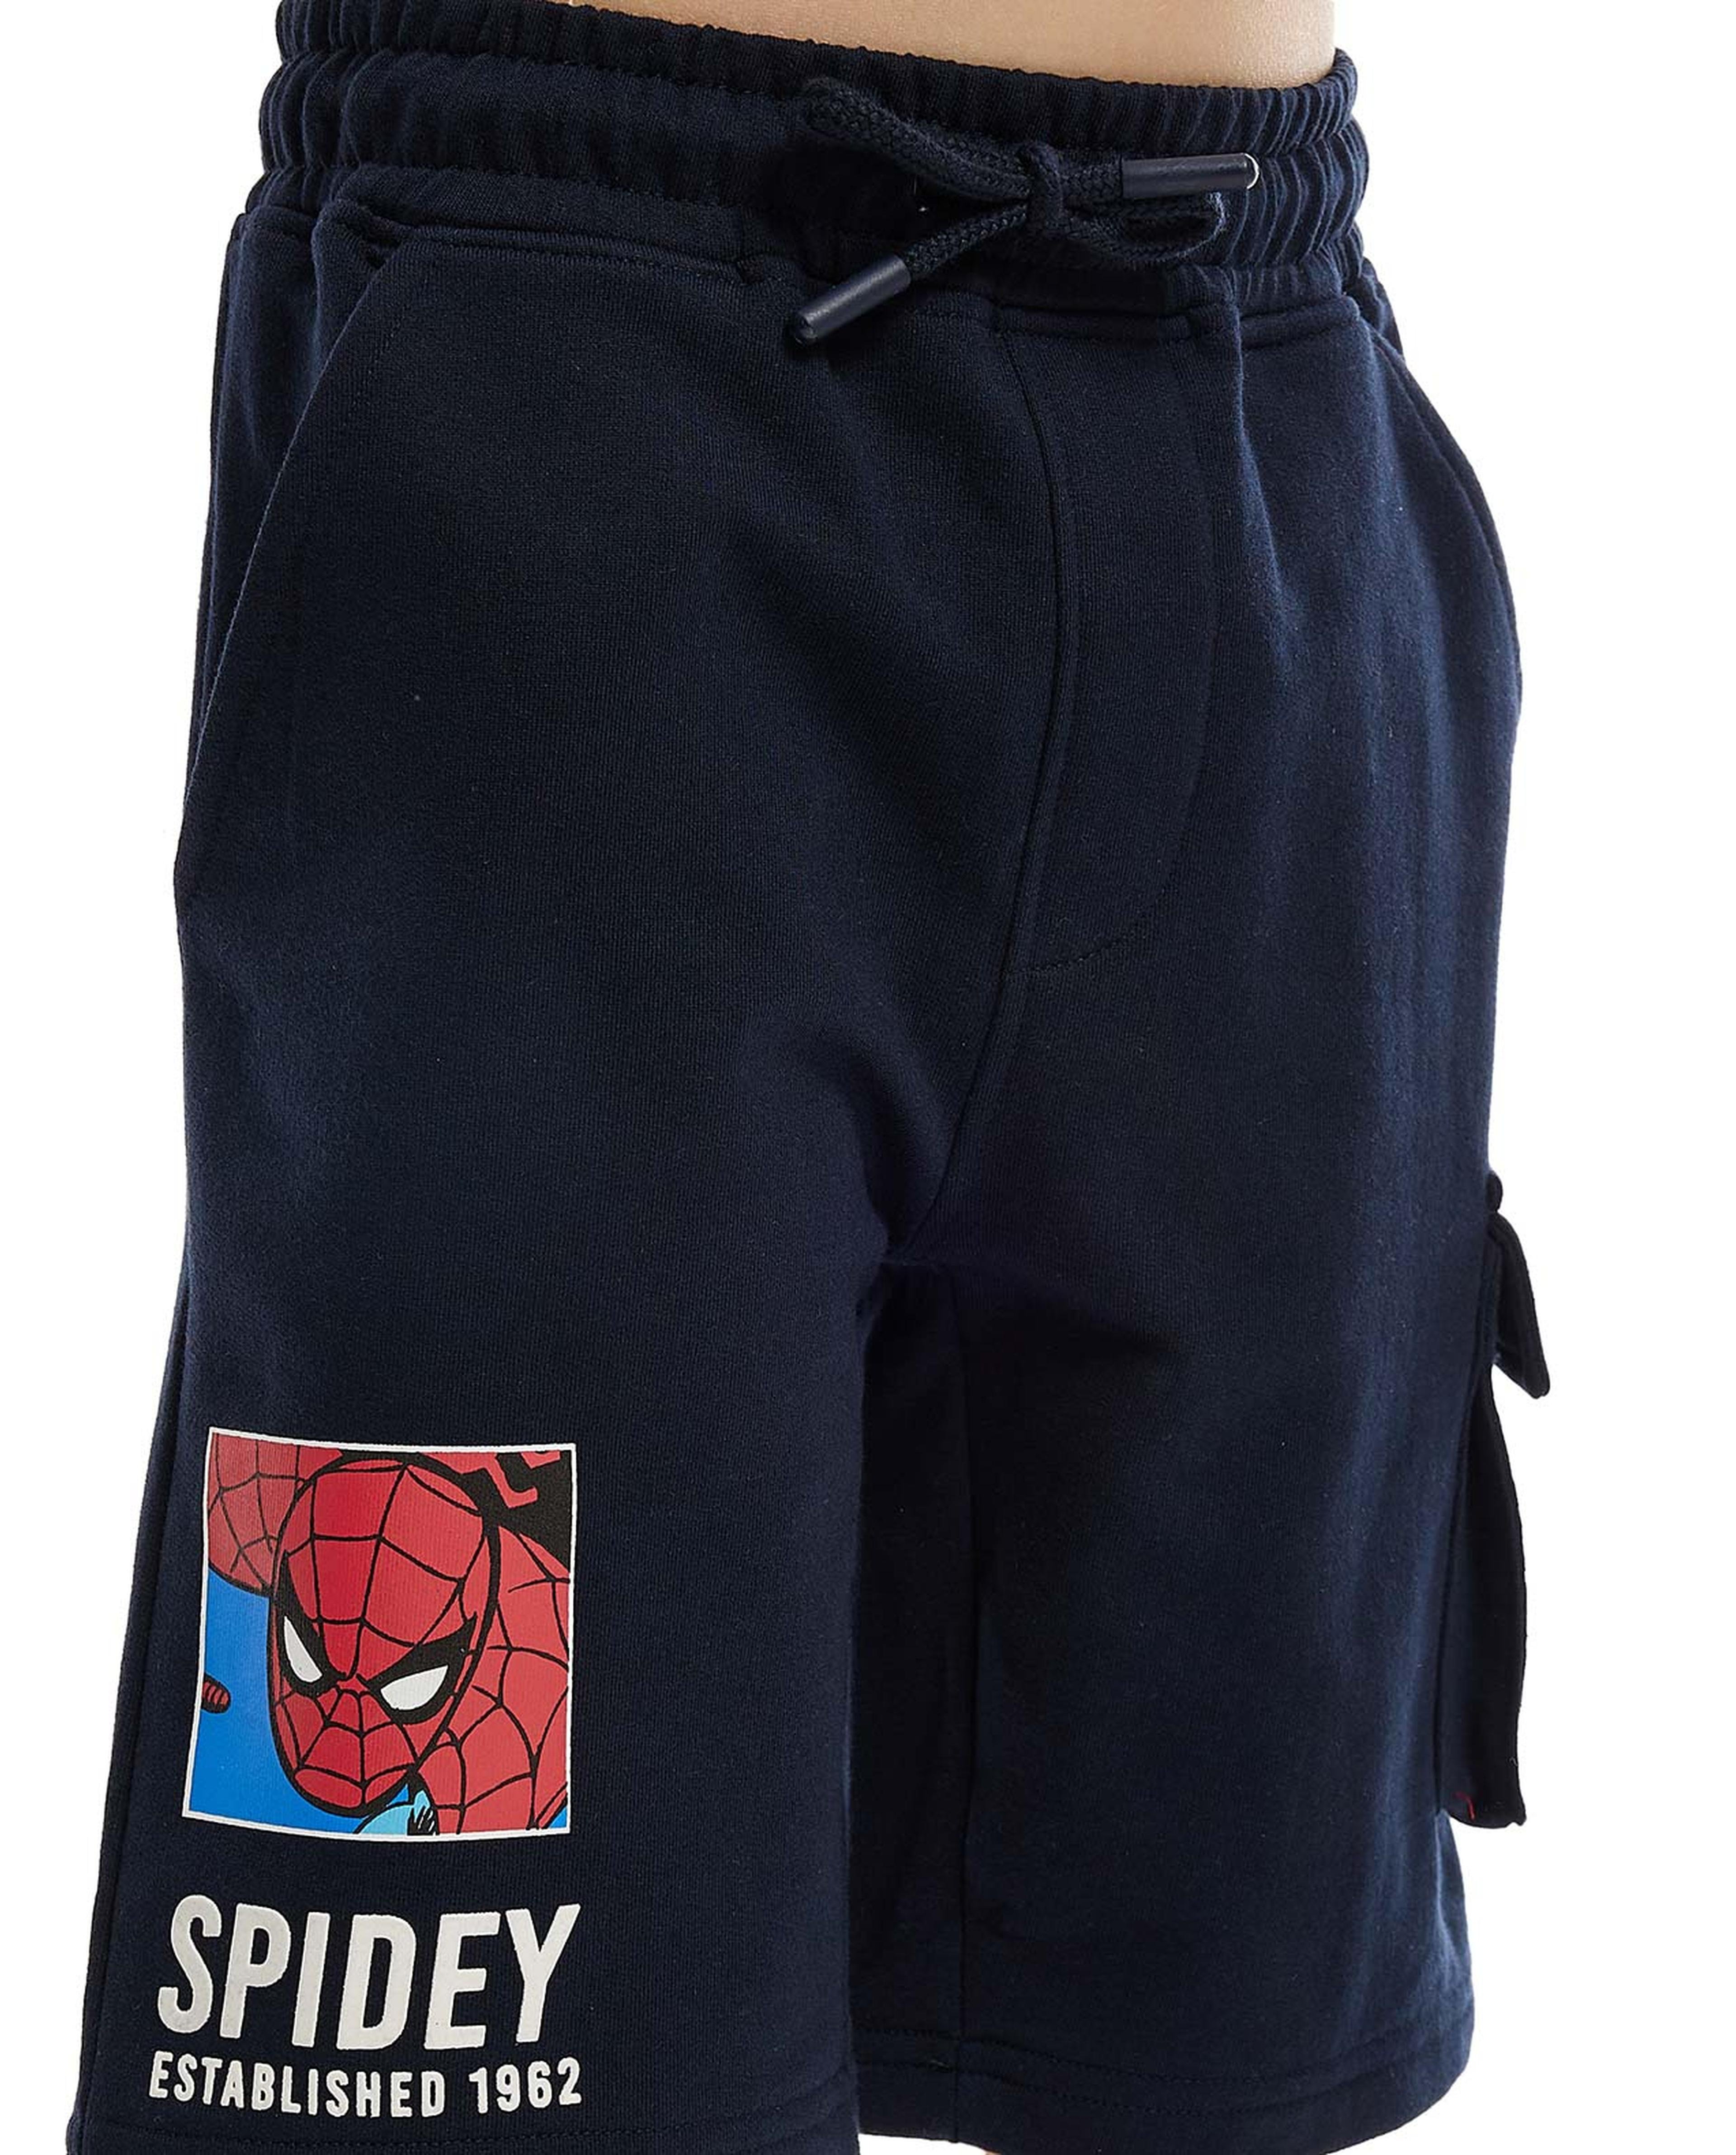 Spiderman Printed Clothing Set